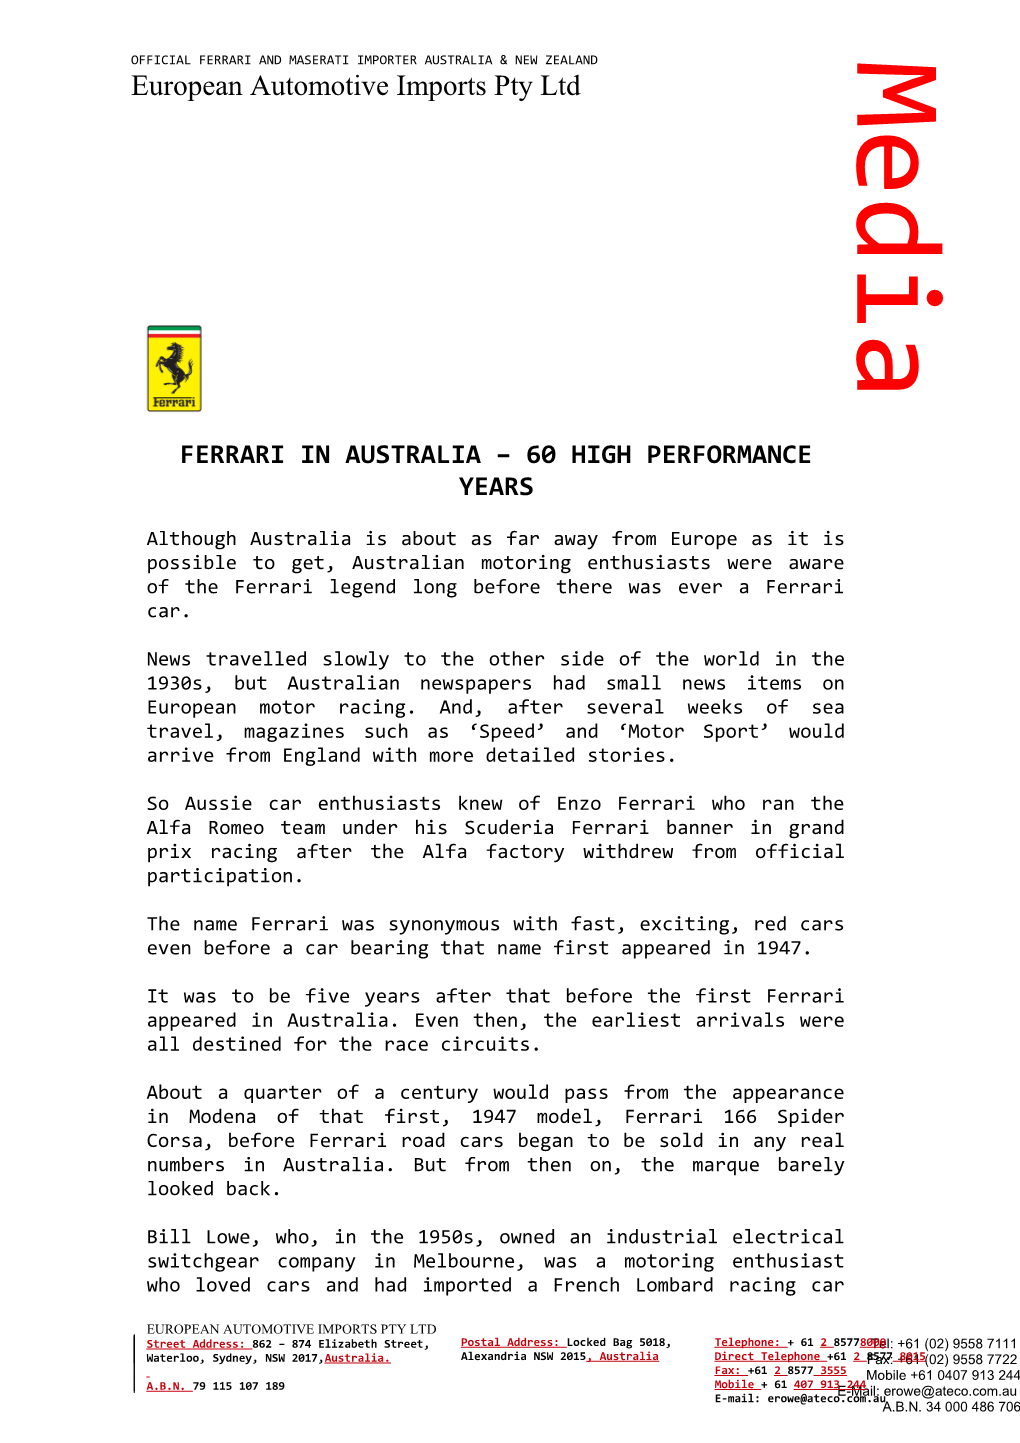 Ferrari in Australia 60 High Performance Years